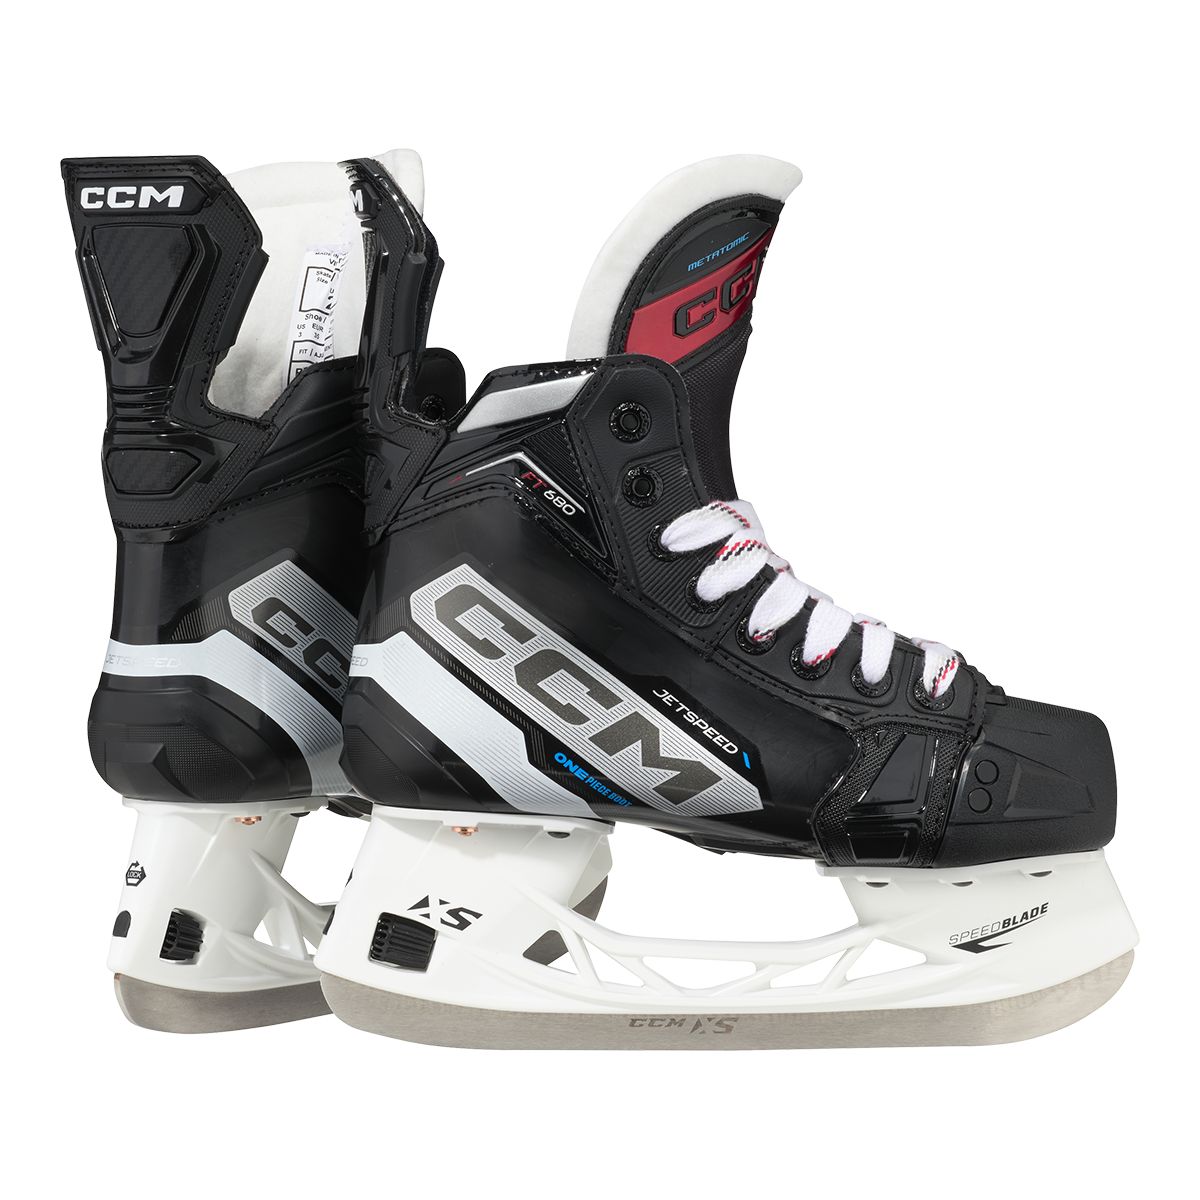 Image of CCM JetSpeed Ft680 Junior Hockey Skates